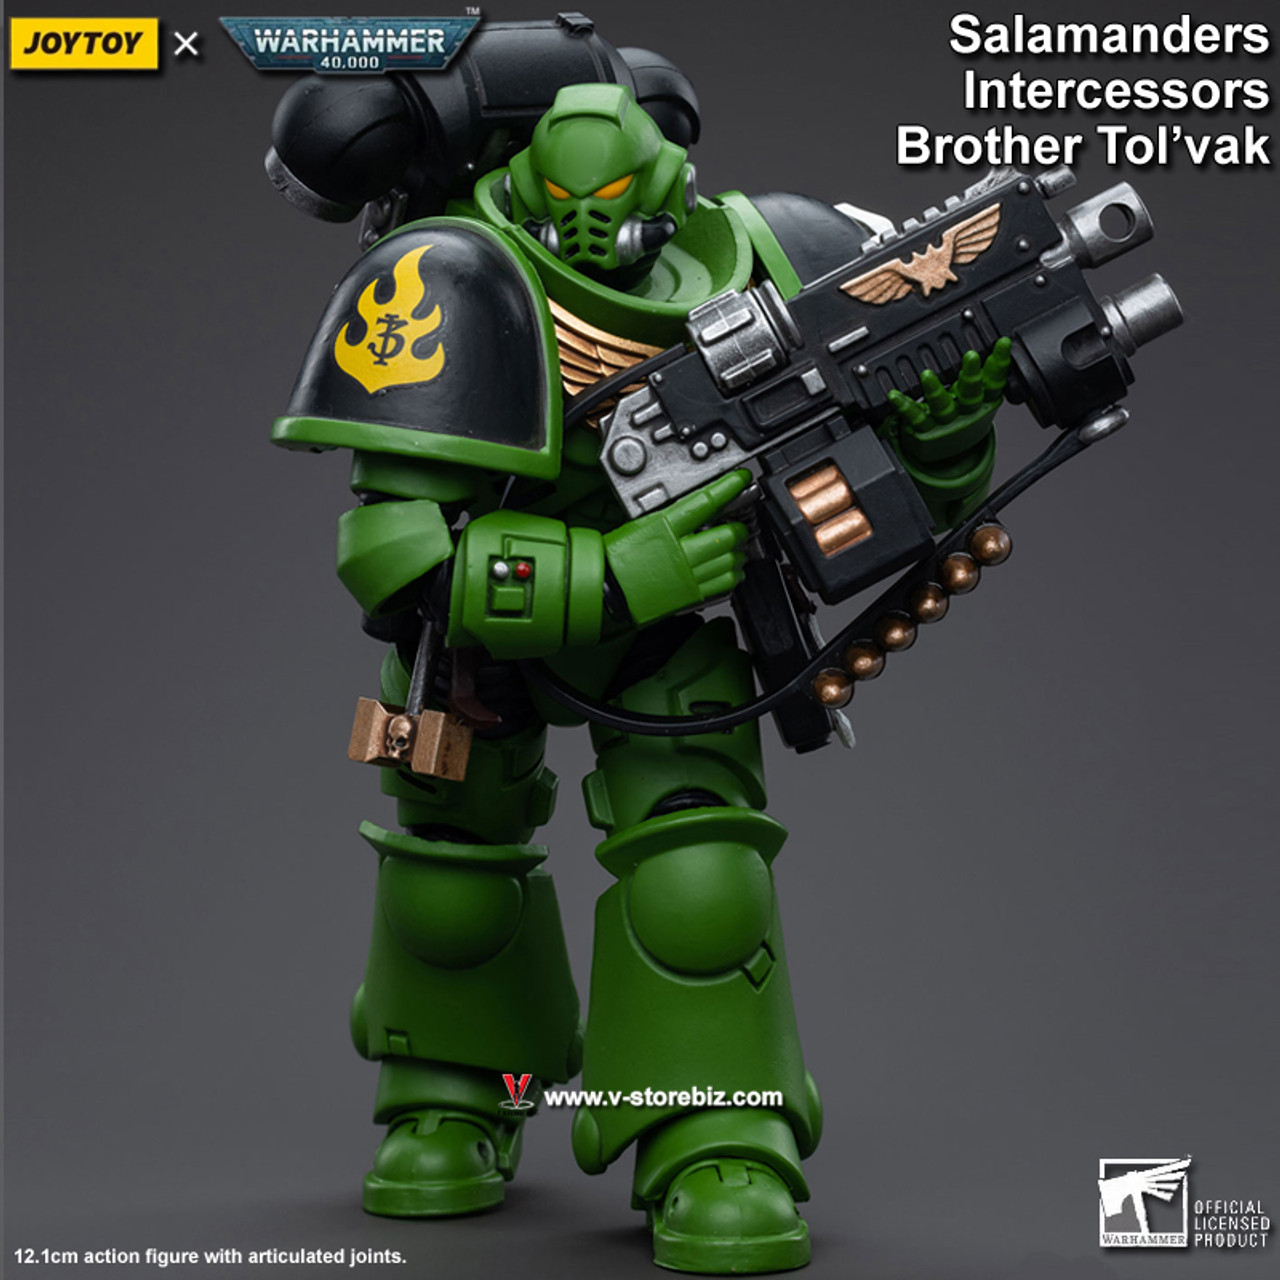 Salamanders Intercessors Sergeant Tsekgan 1/18 Scale | Warhammer 40K 